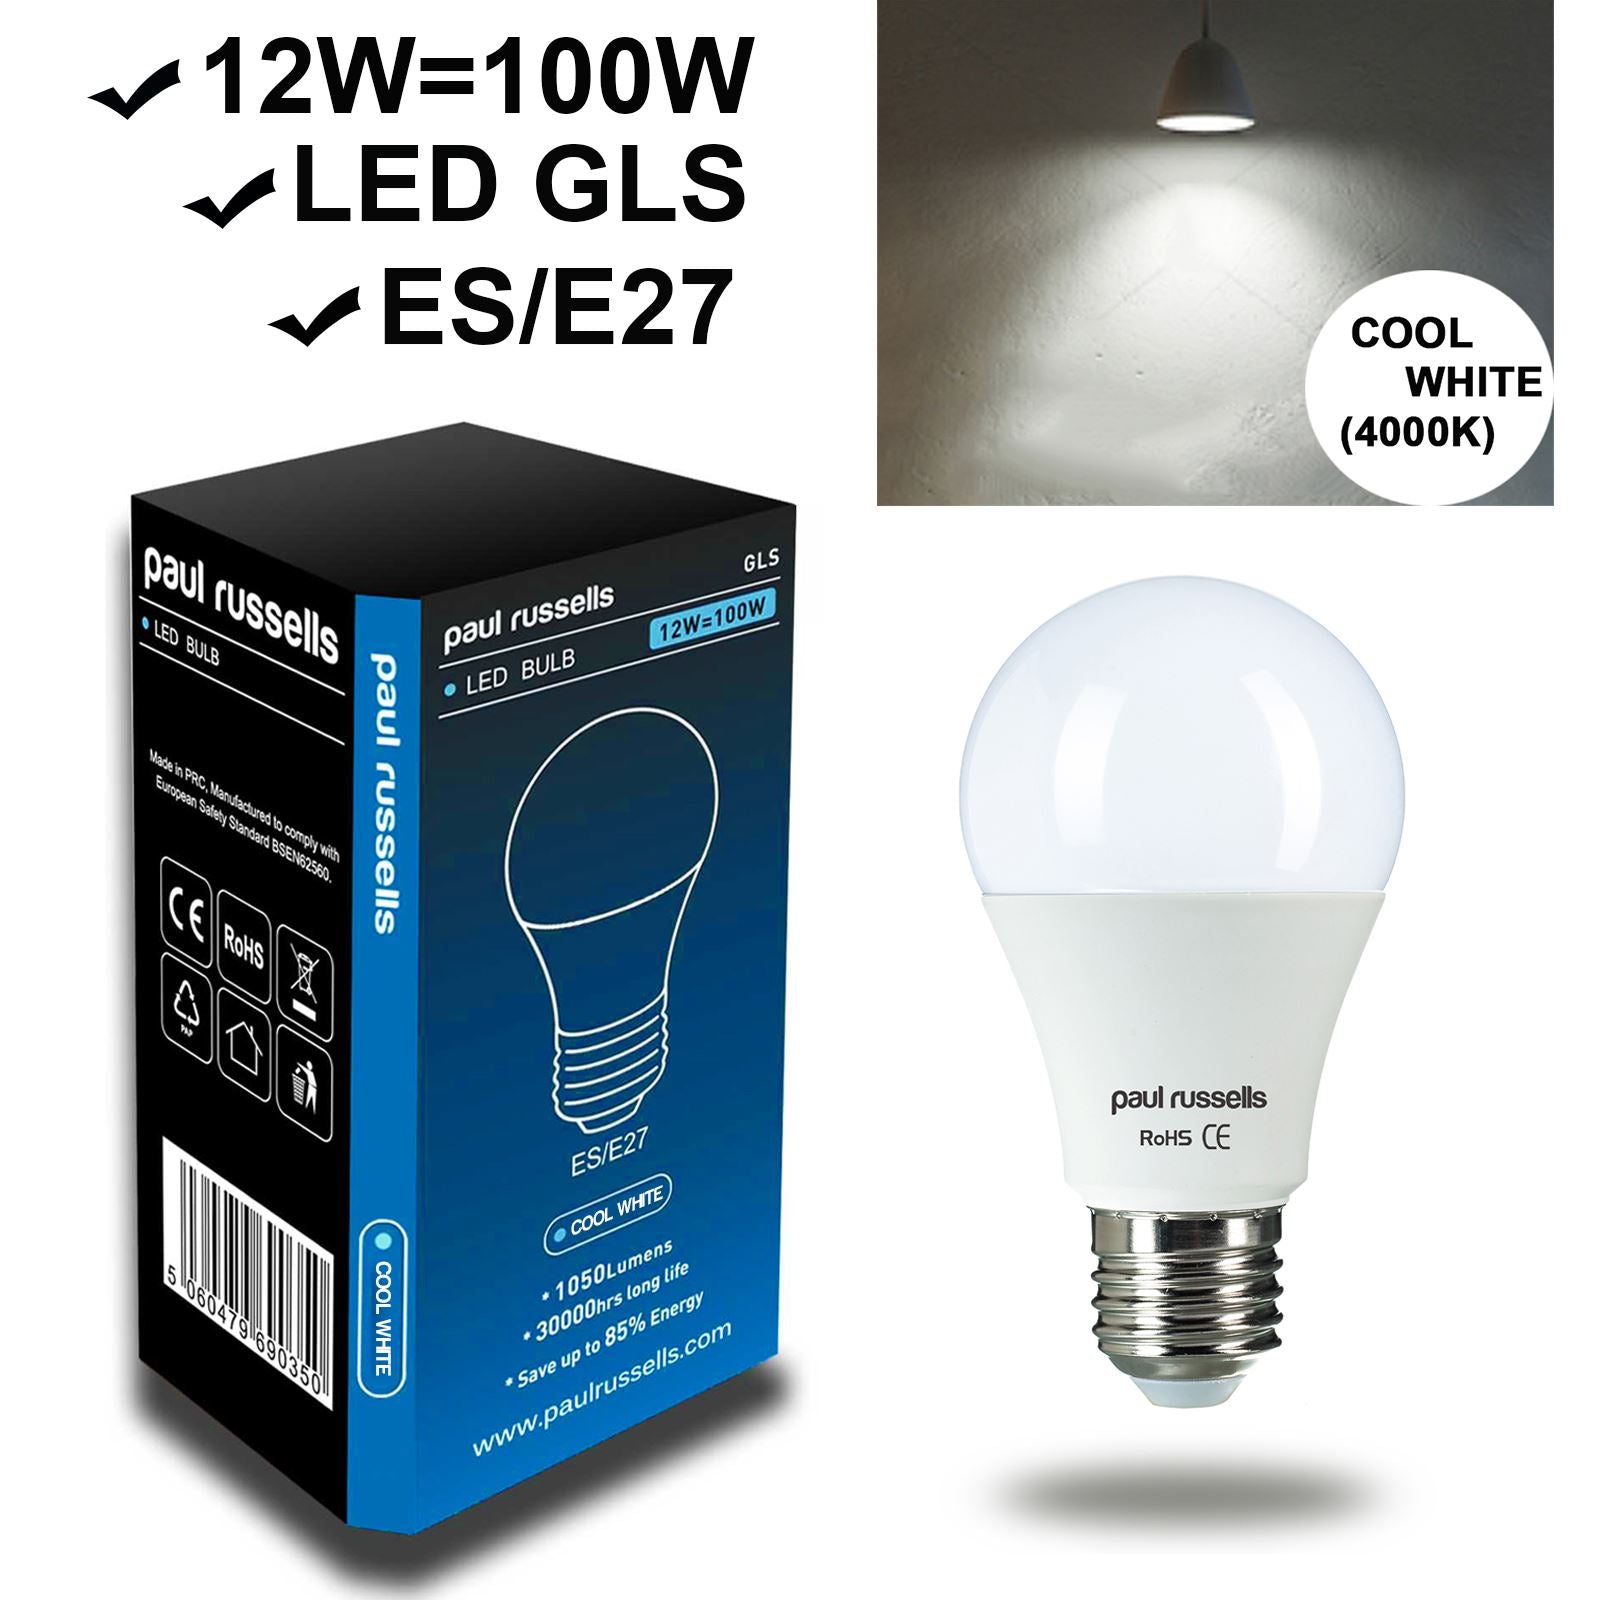 10x Pack LED Frosted GLS 12W=100W Cool White 4000K ES E27 Edison Screw Bulbs [10 Bulbs]